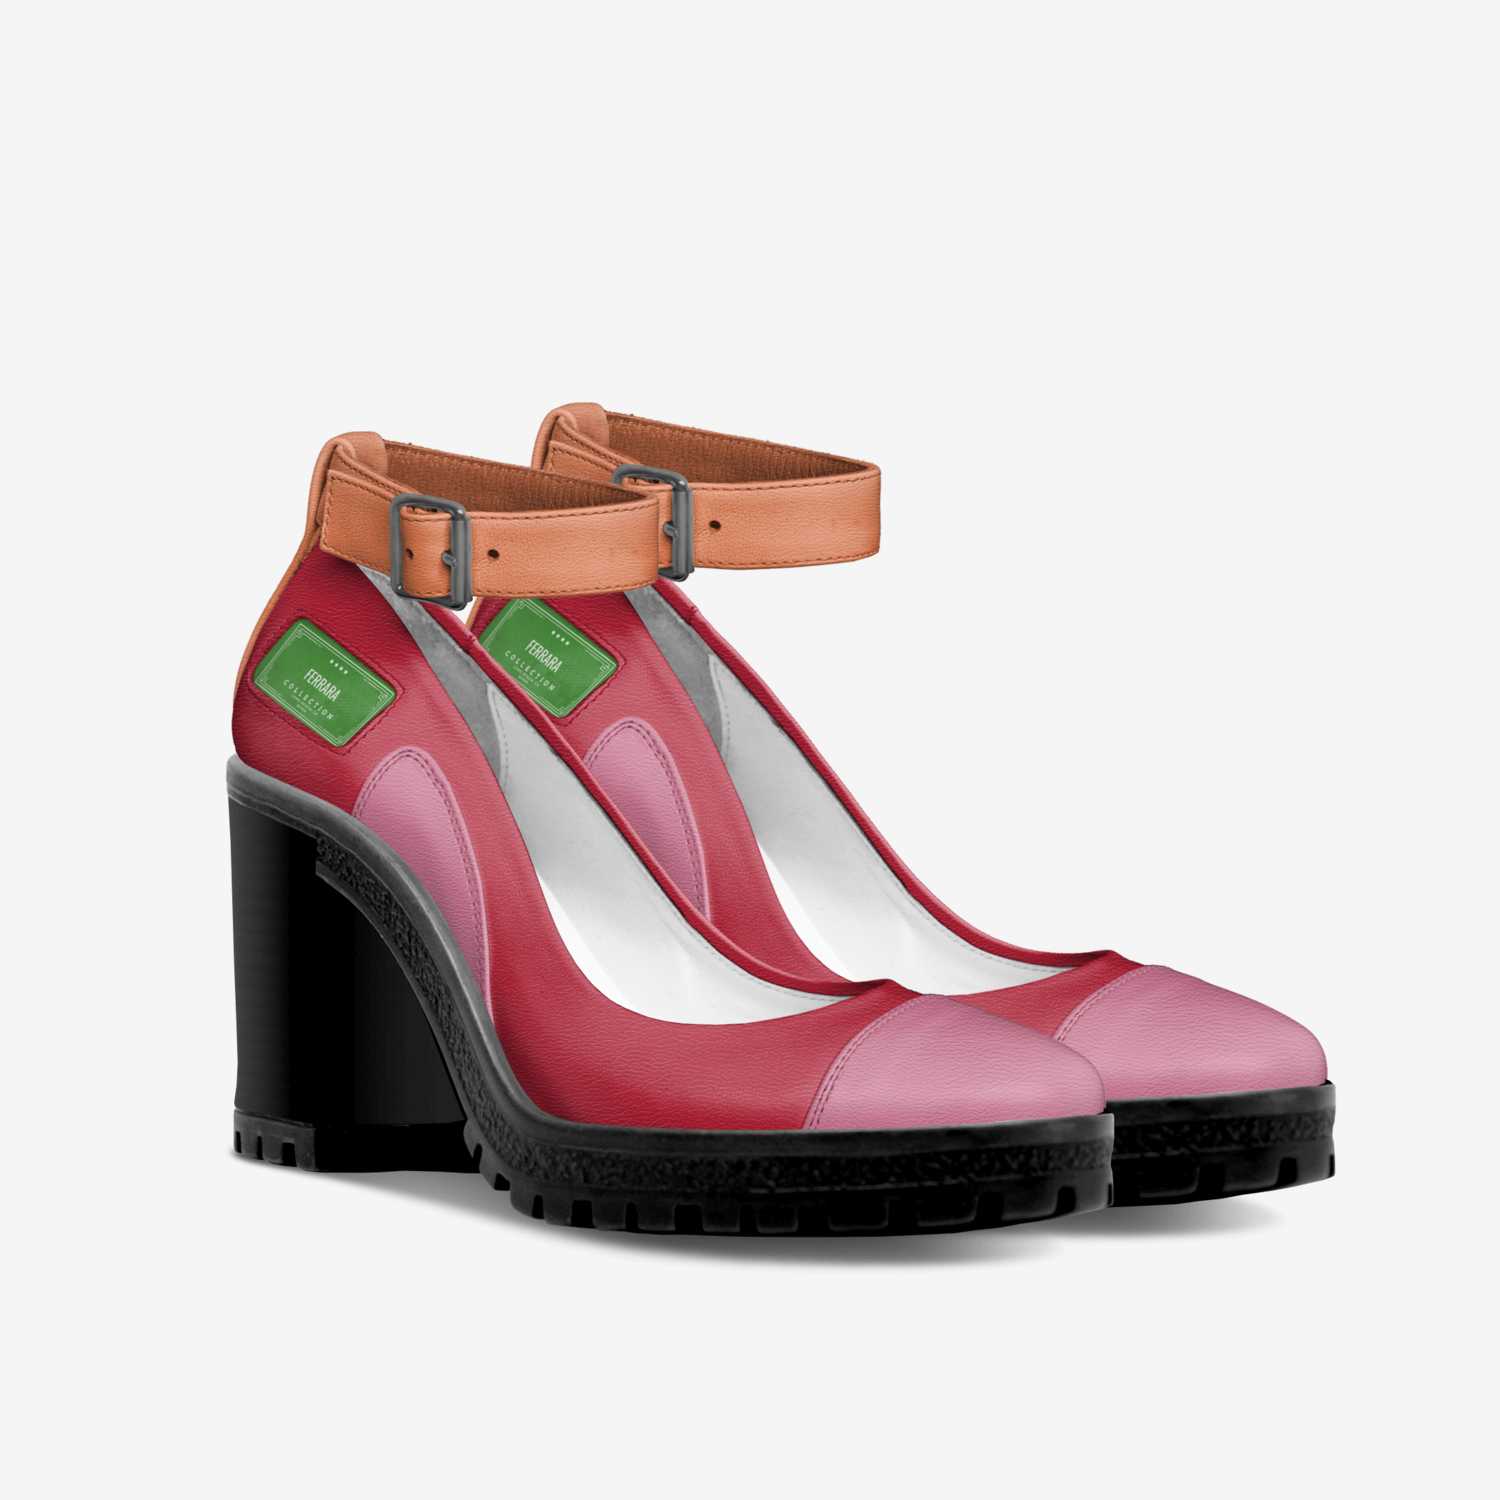 Ferrara | A Custom Shoe concept by Dana Ferrara